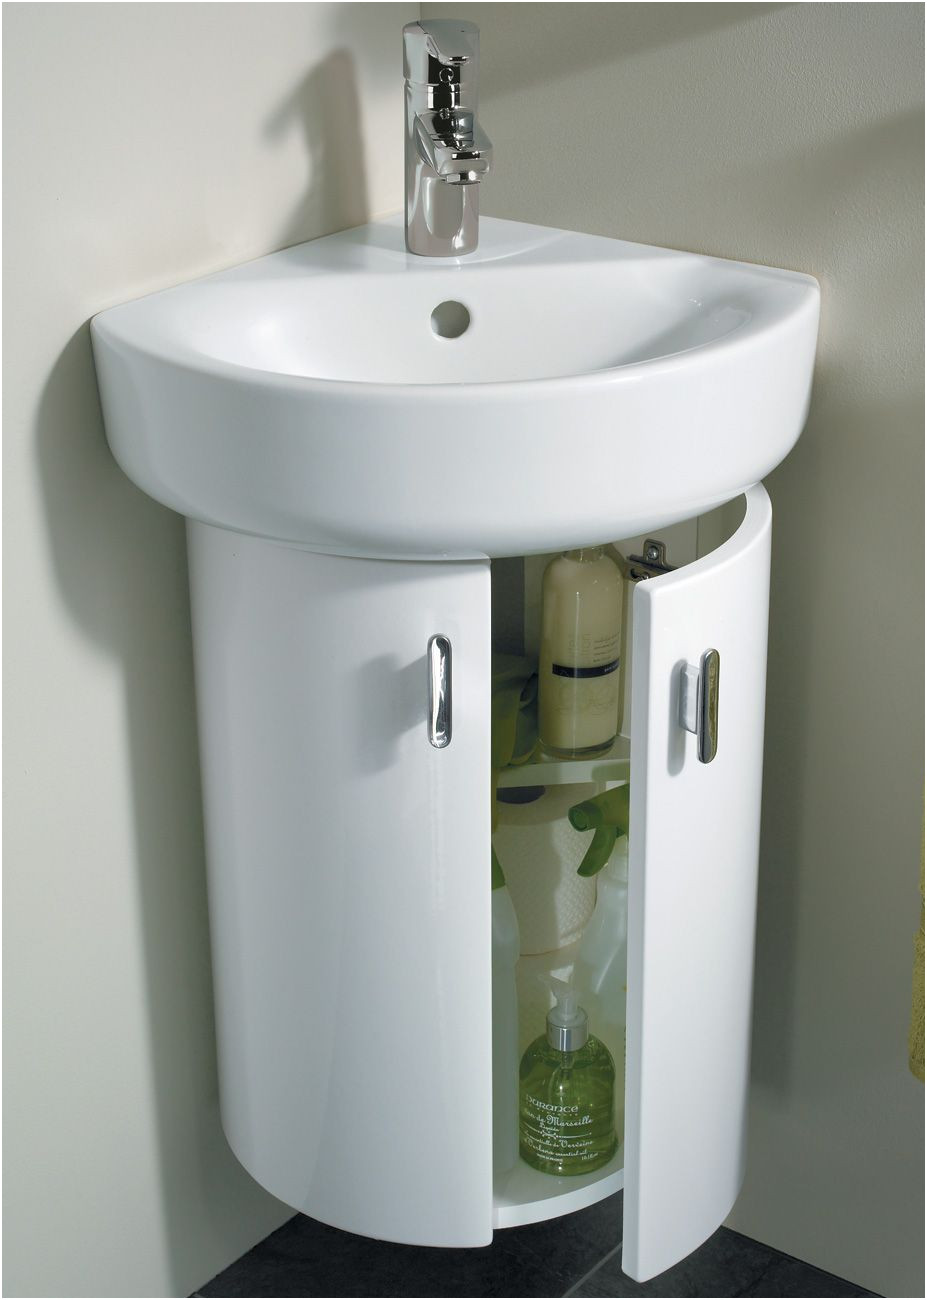 Inspirational Storage Ideas for Bathroom with Pedestal Sink